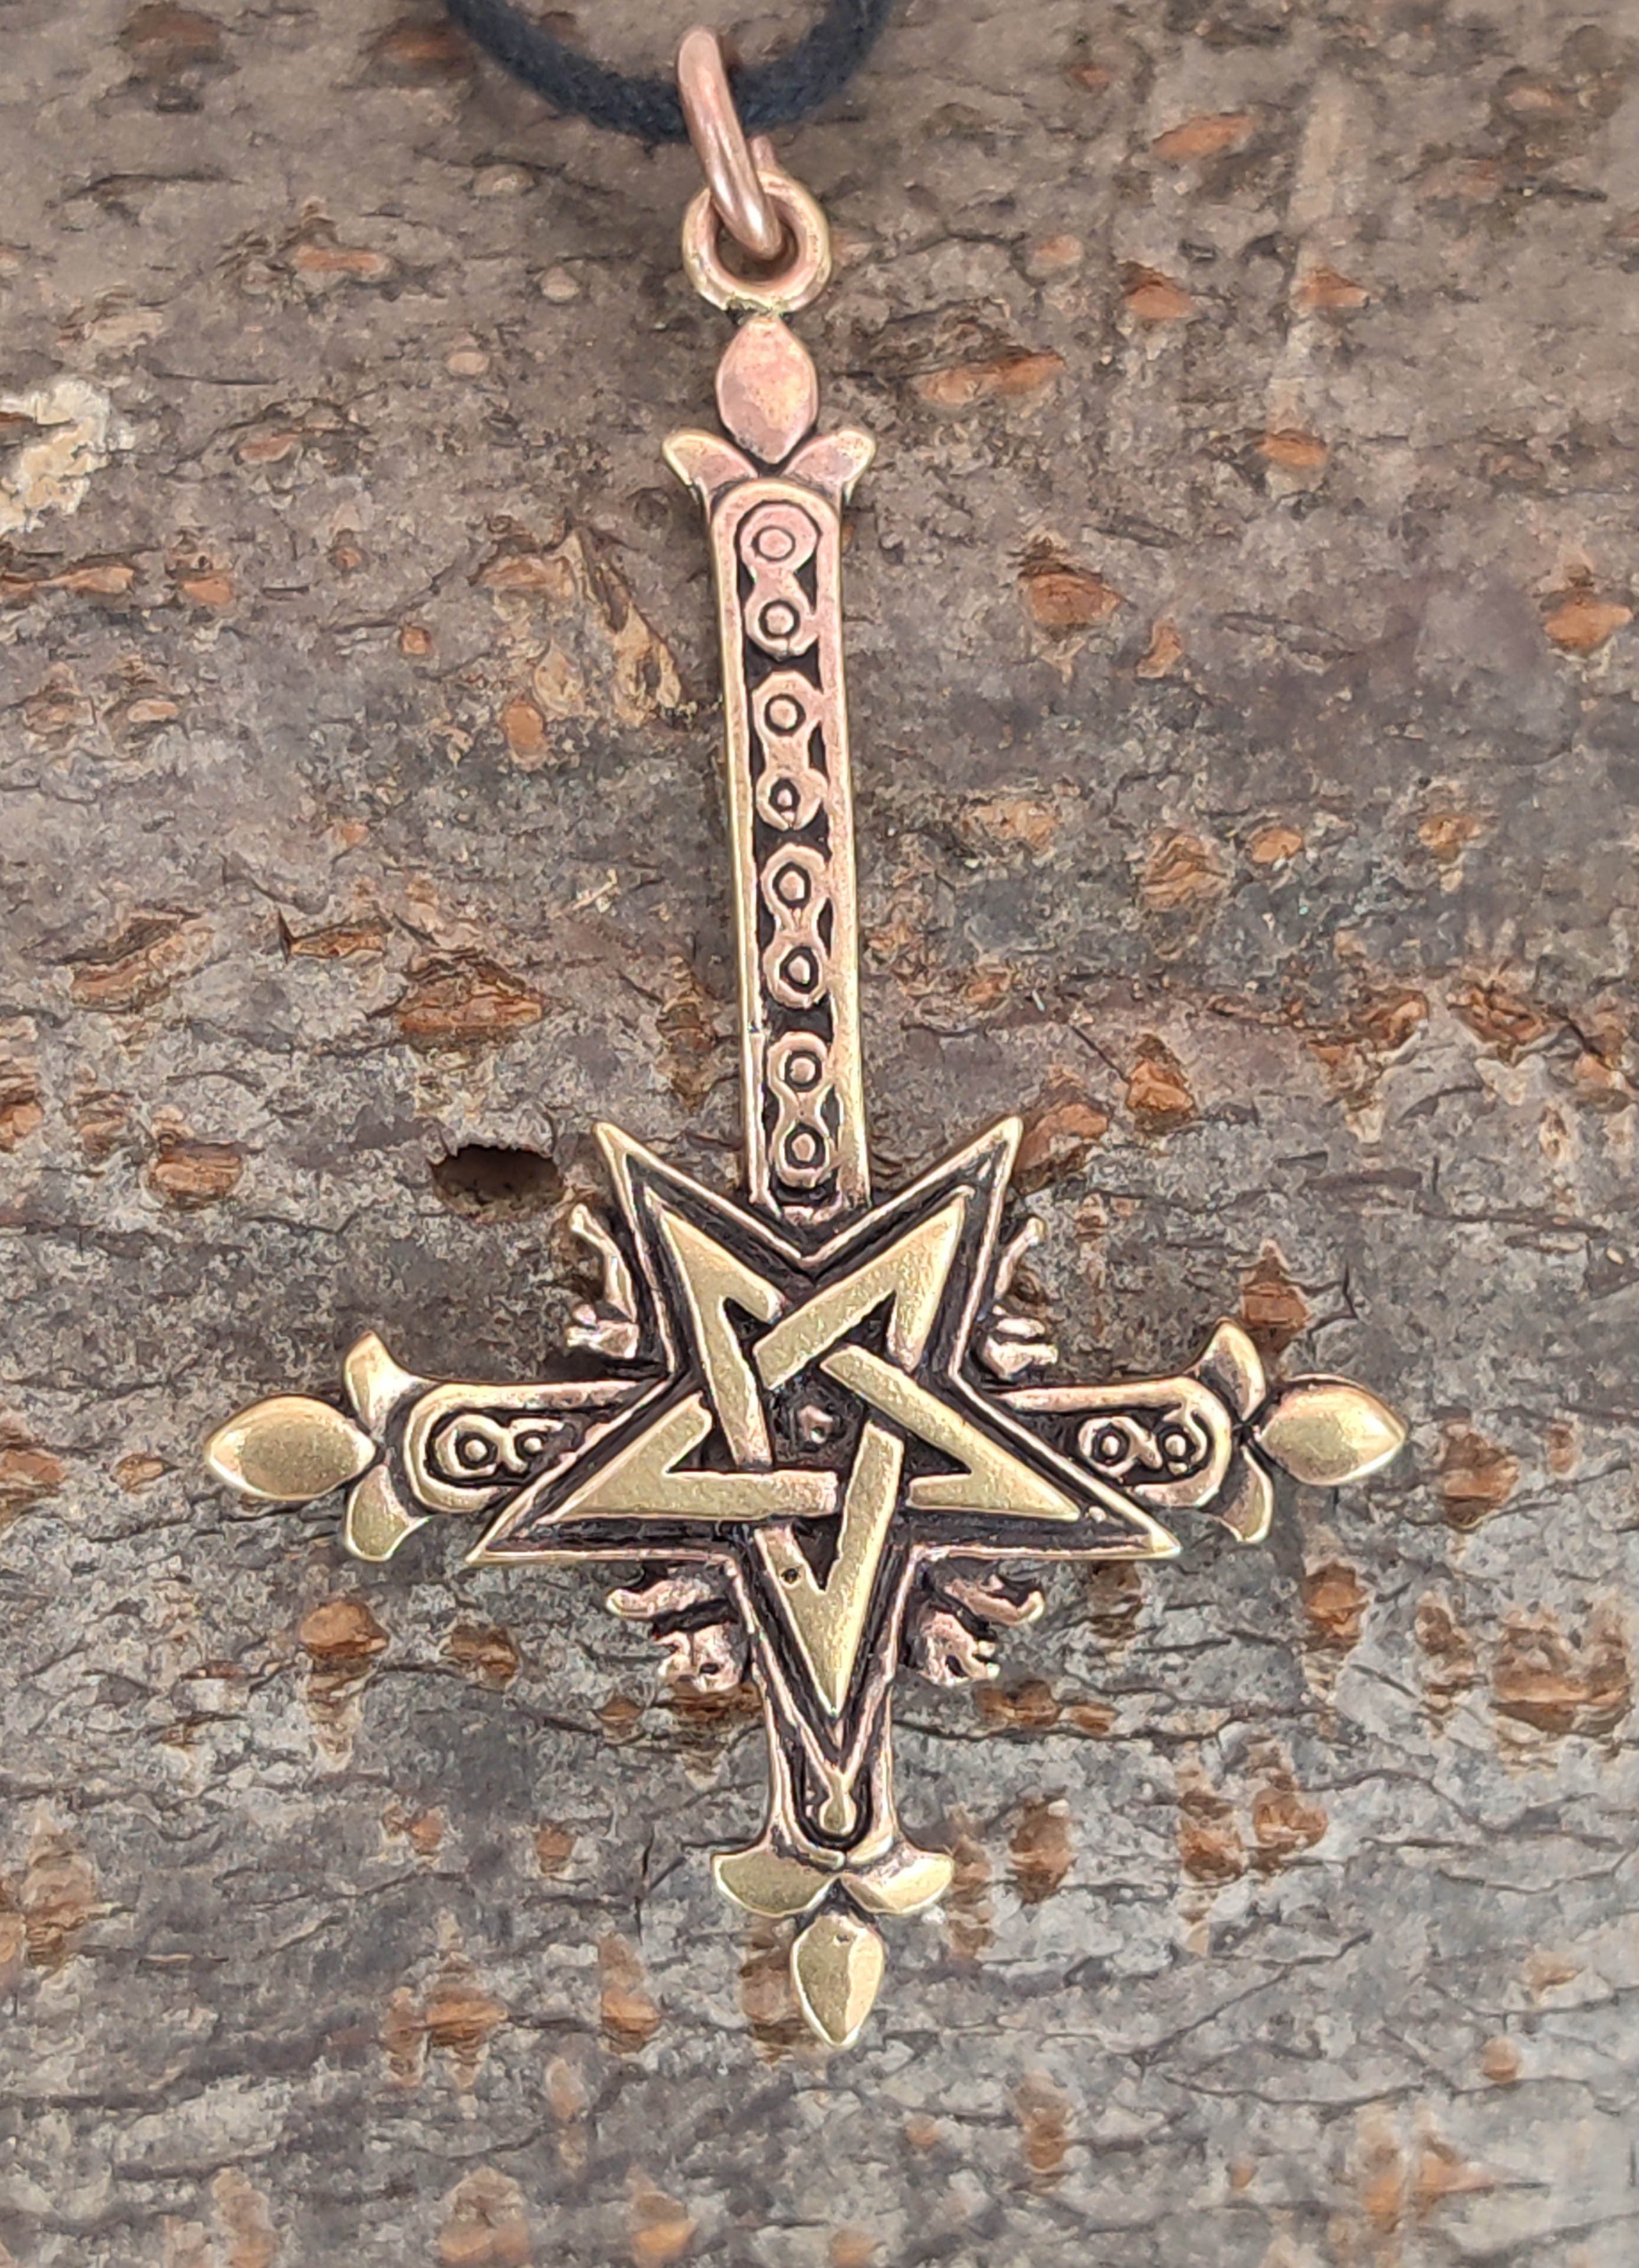 Kreuz Bronze of Anhänger Teufel Satan Satanskreuz Leather Kettenanhänger Satanist Kiss umgedrehtes